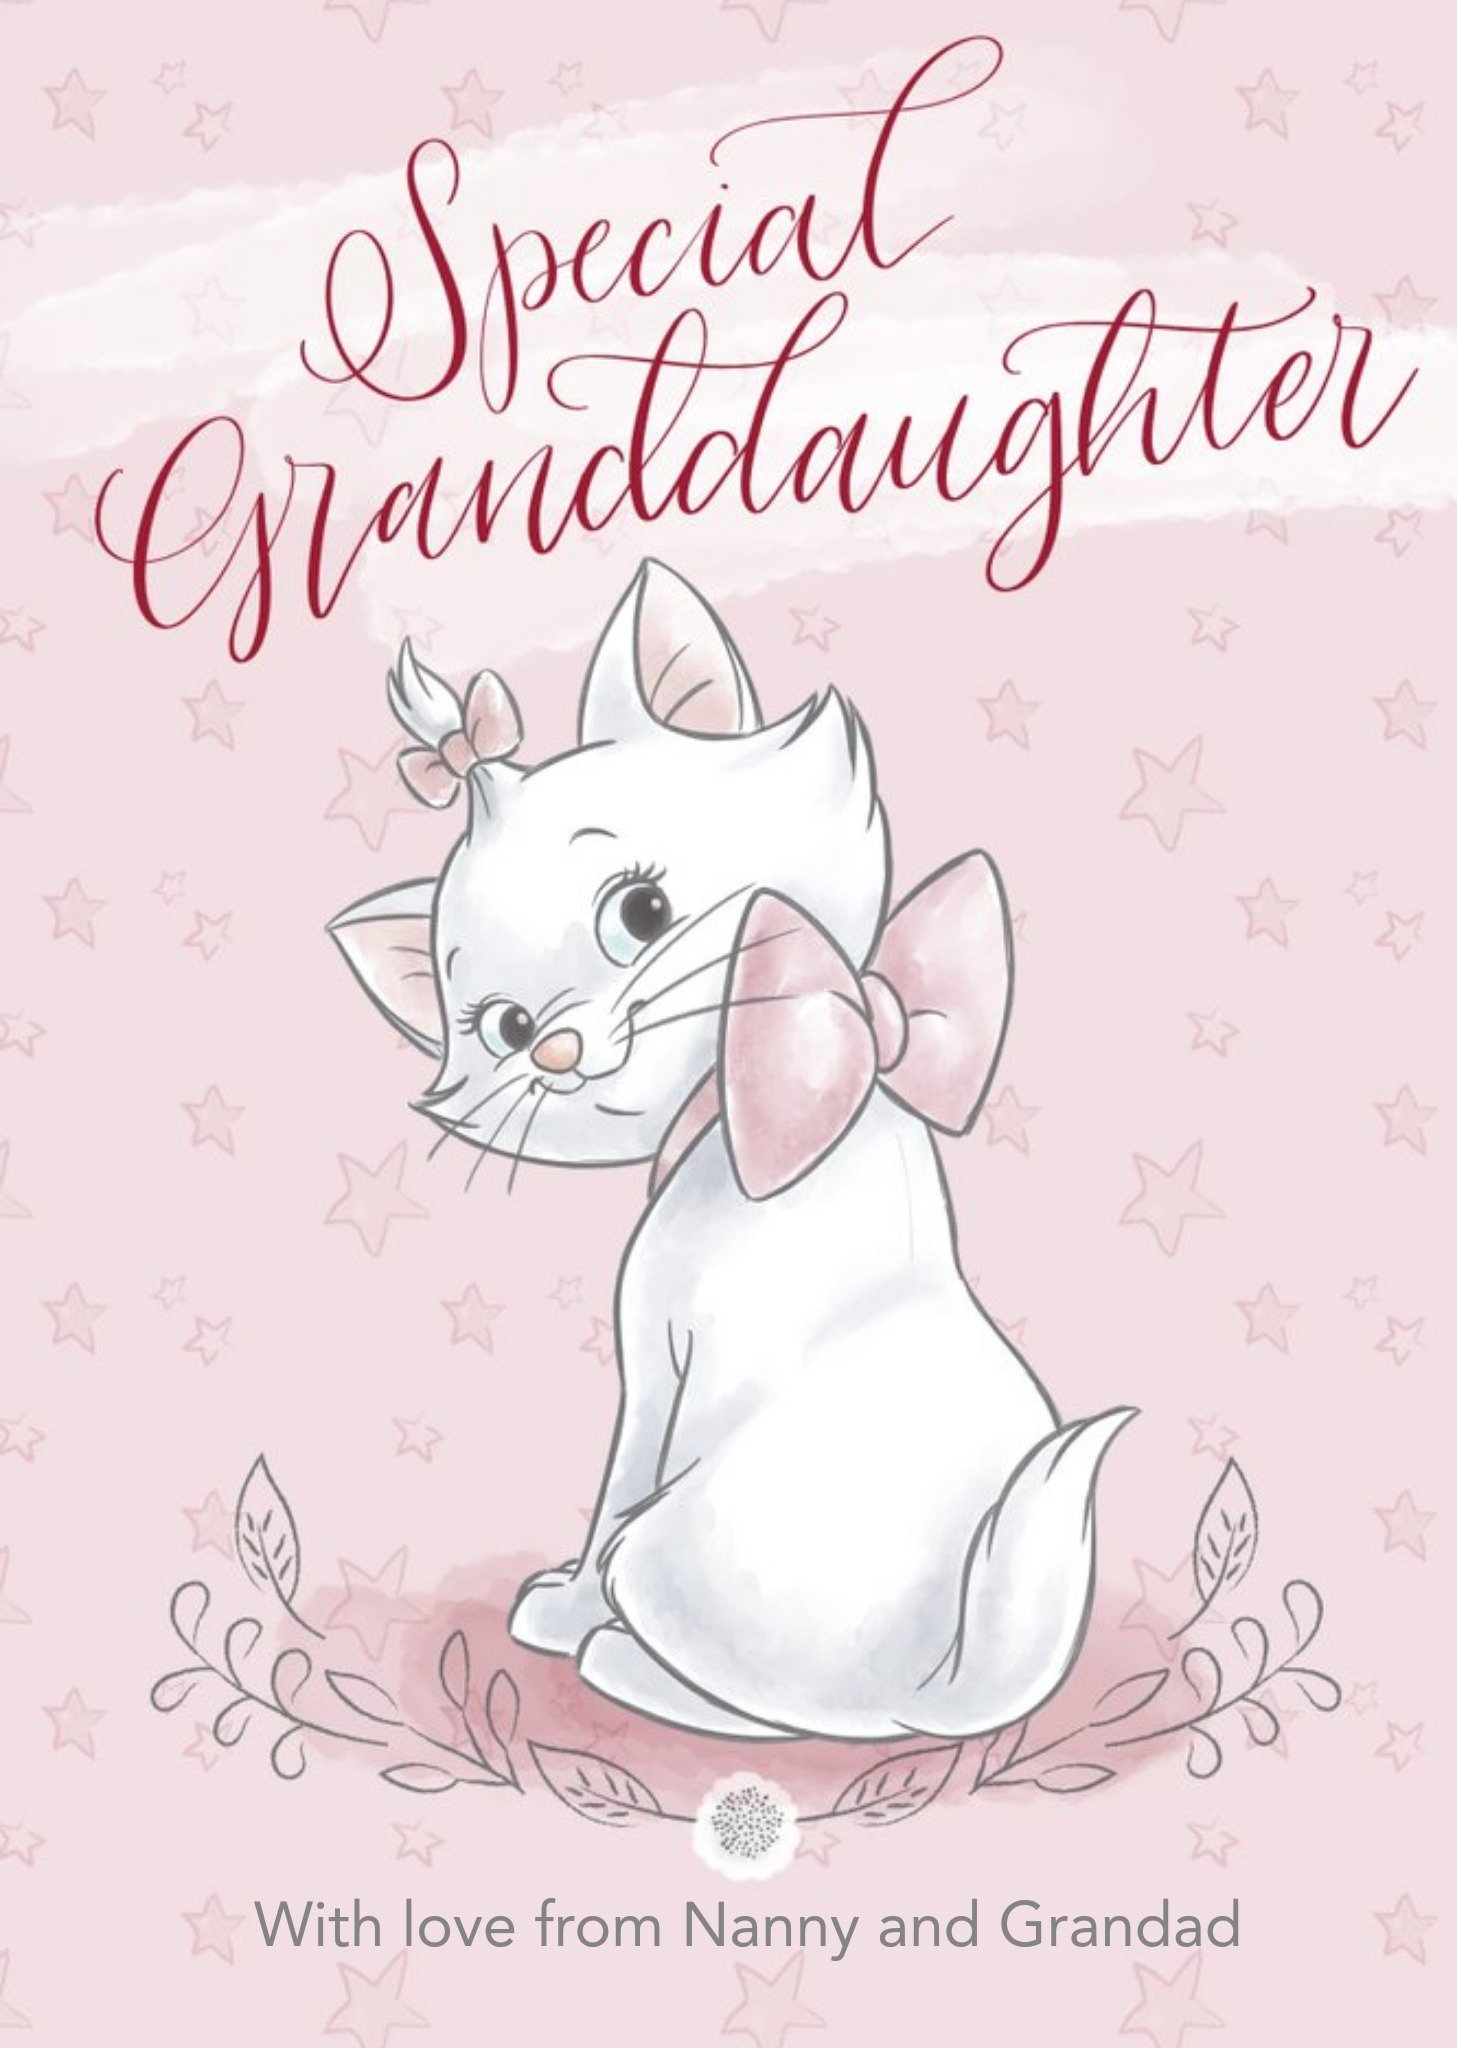 Other Disney Aristocats - Cute Granddaughter Birthday Card Ecard